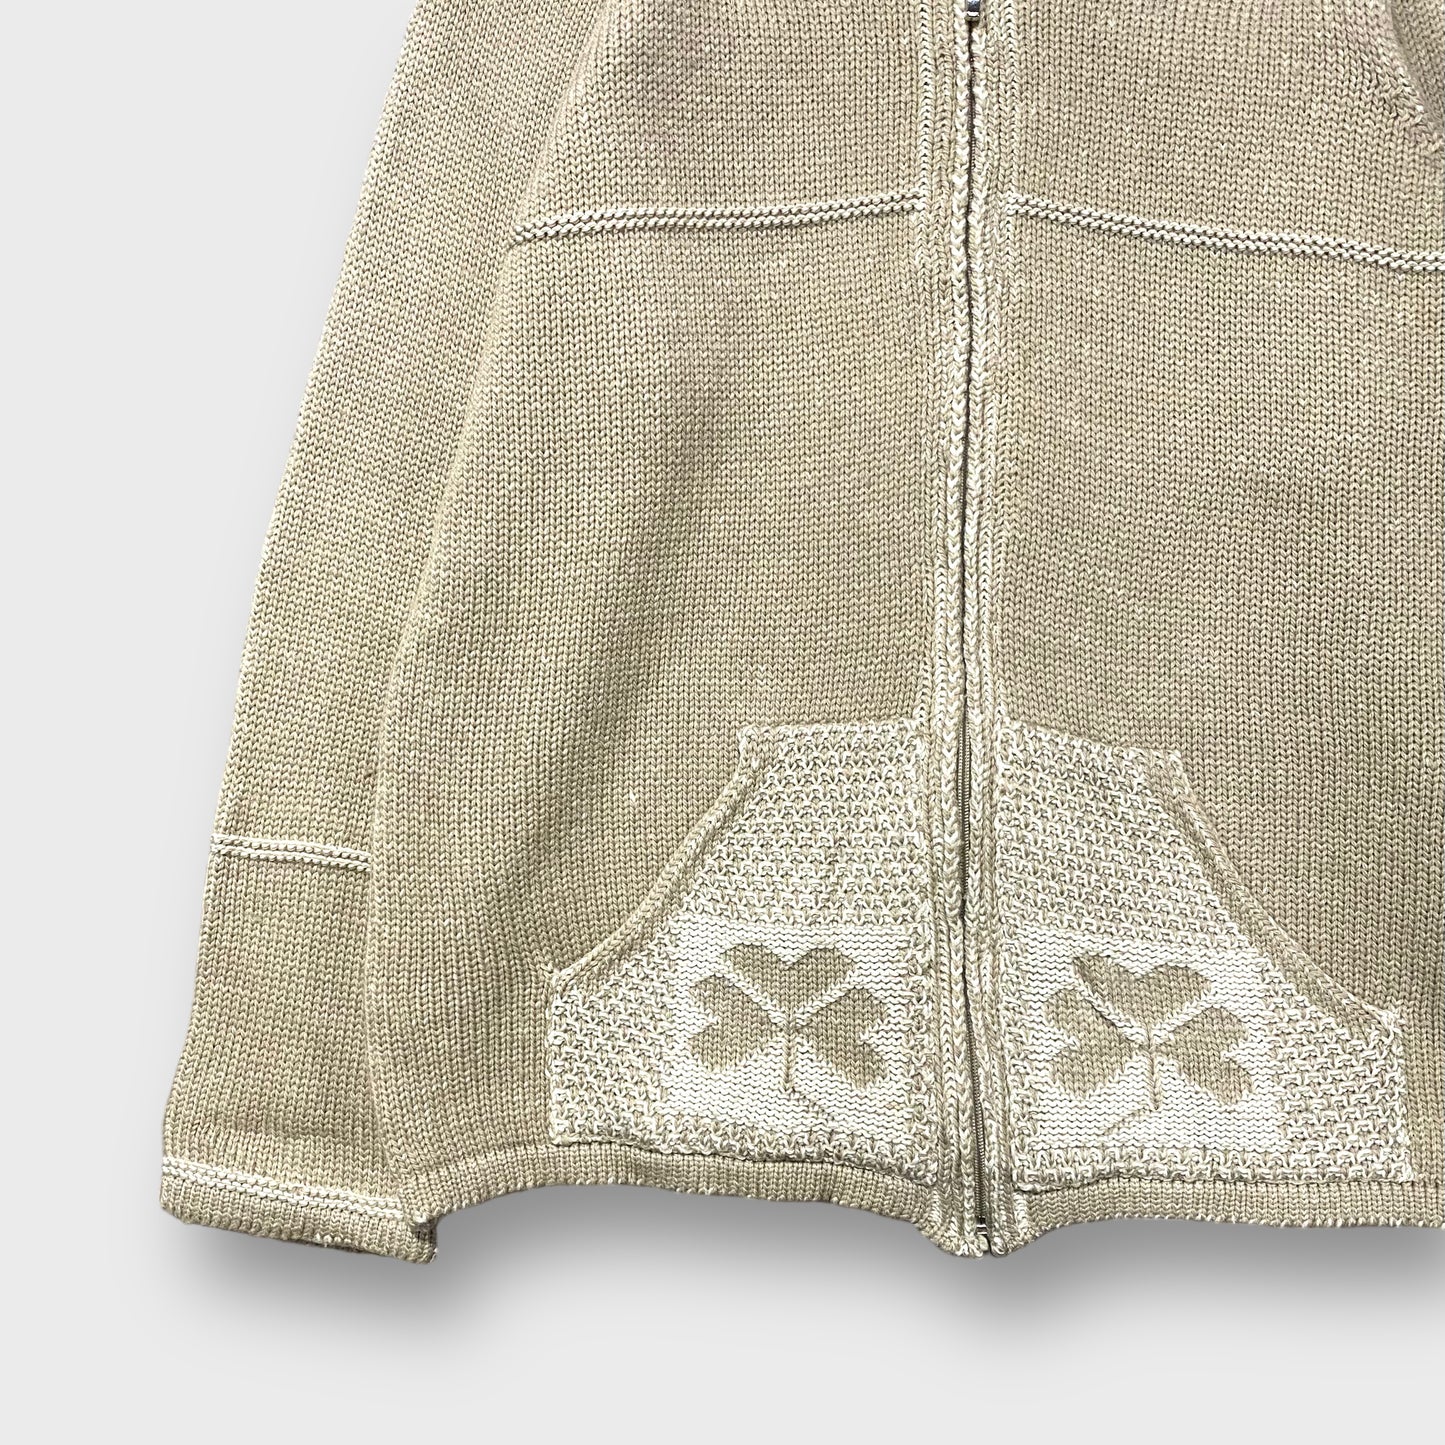 Clover design full zip knit jacket